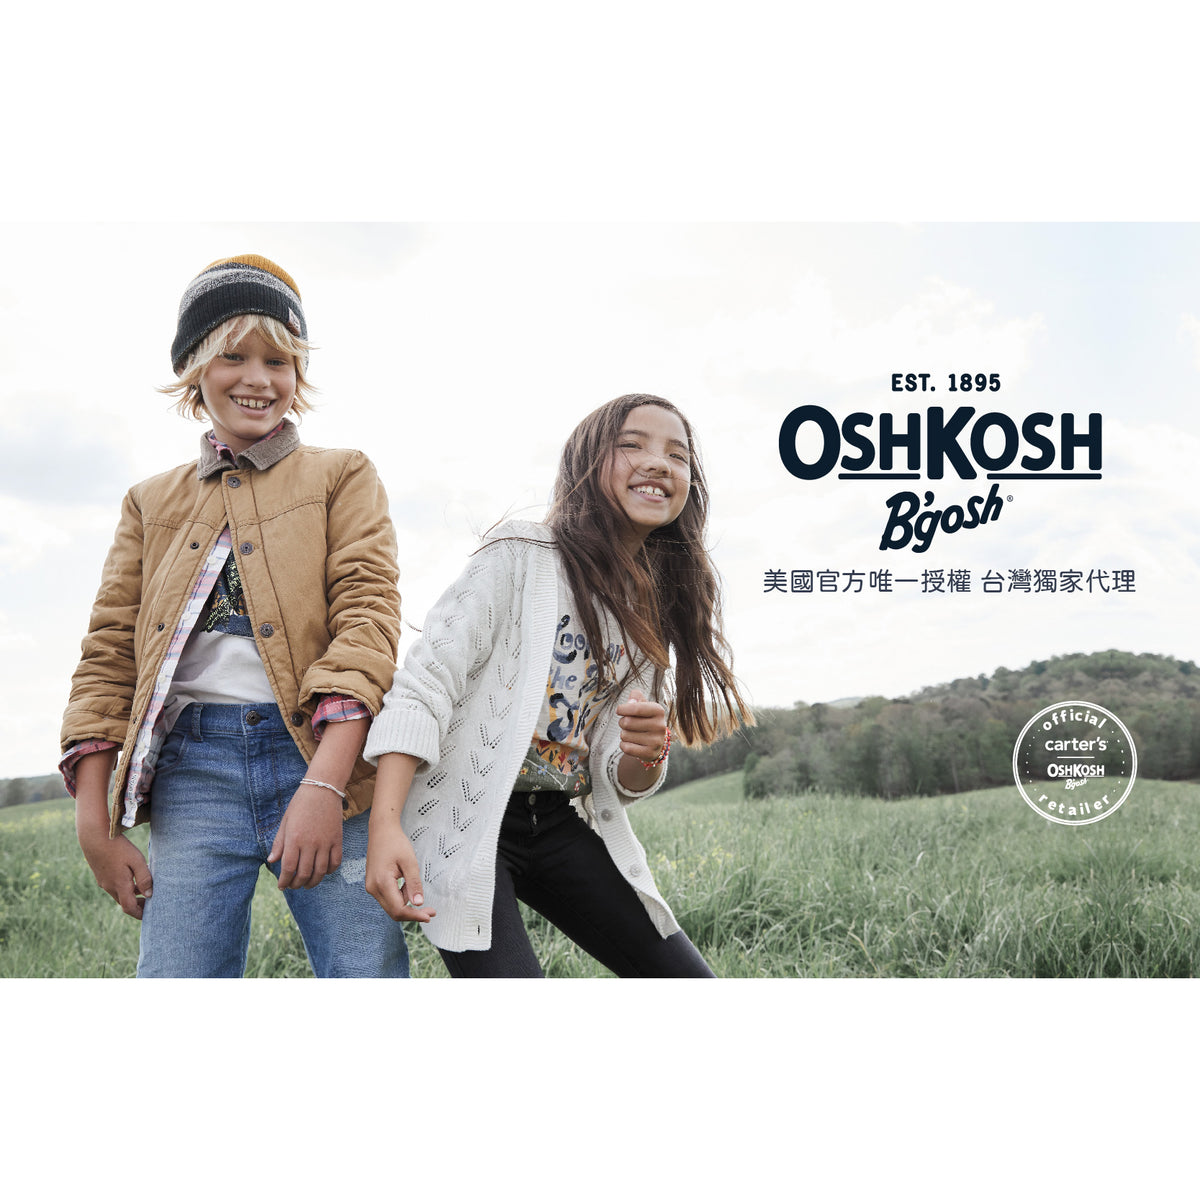 OshKosh 高腰復古風格牛仔褲(5-8)